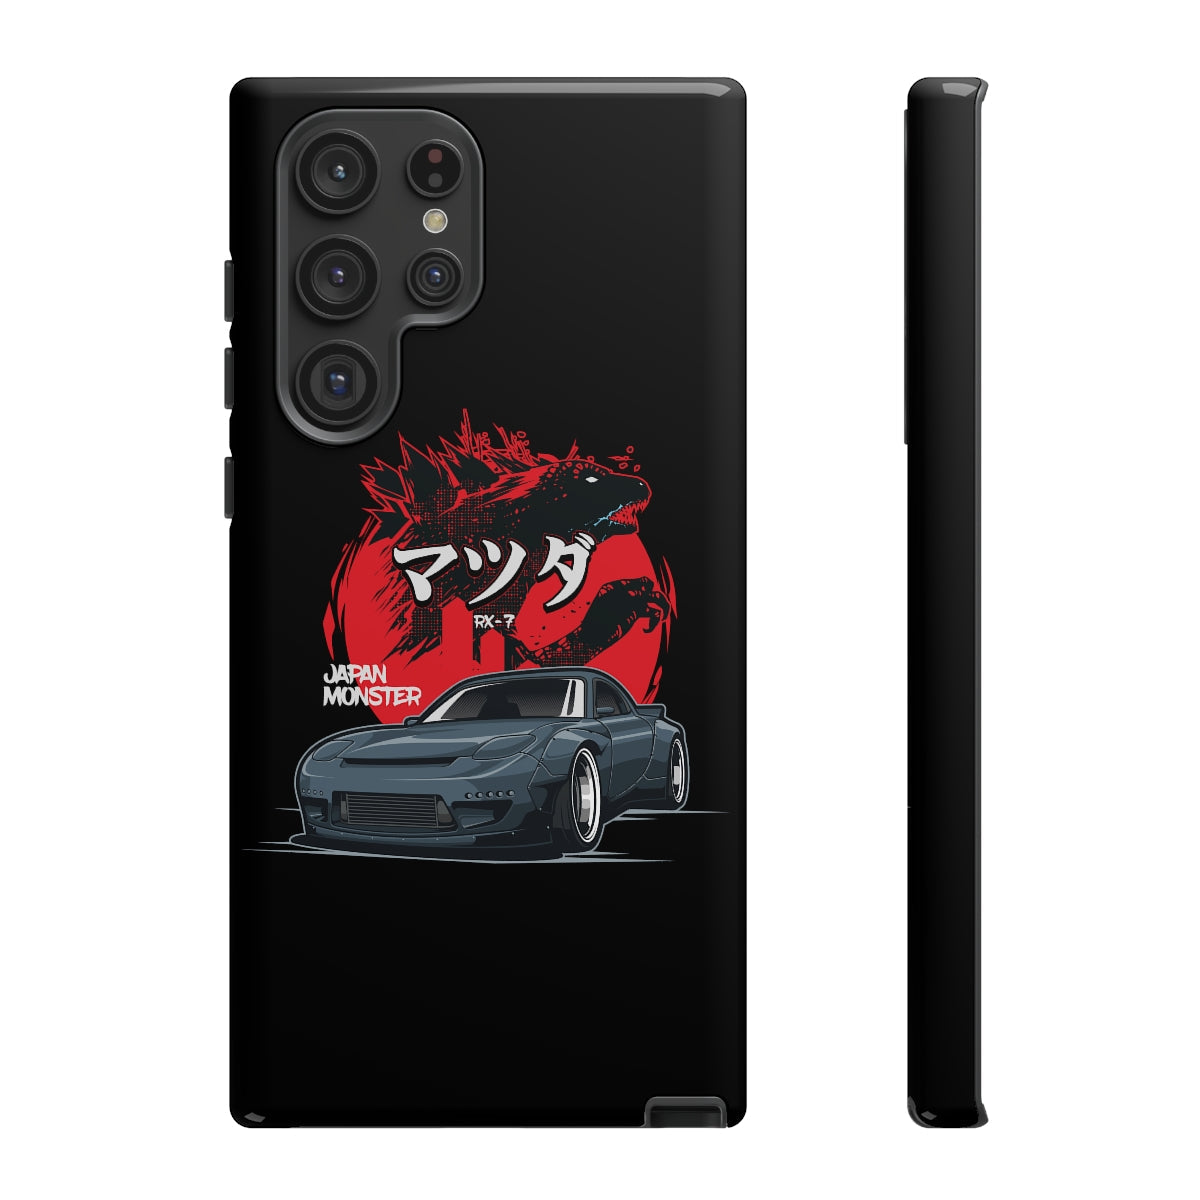 Mazda RX-7 Japan Monster - Car Phone Case - Samsung Galaxy S22 Ultra